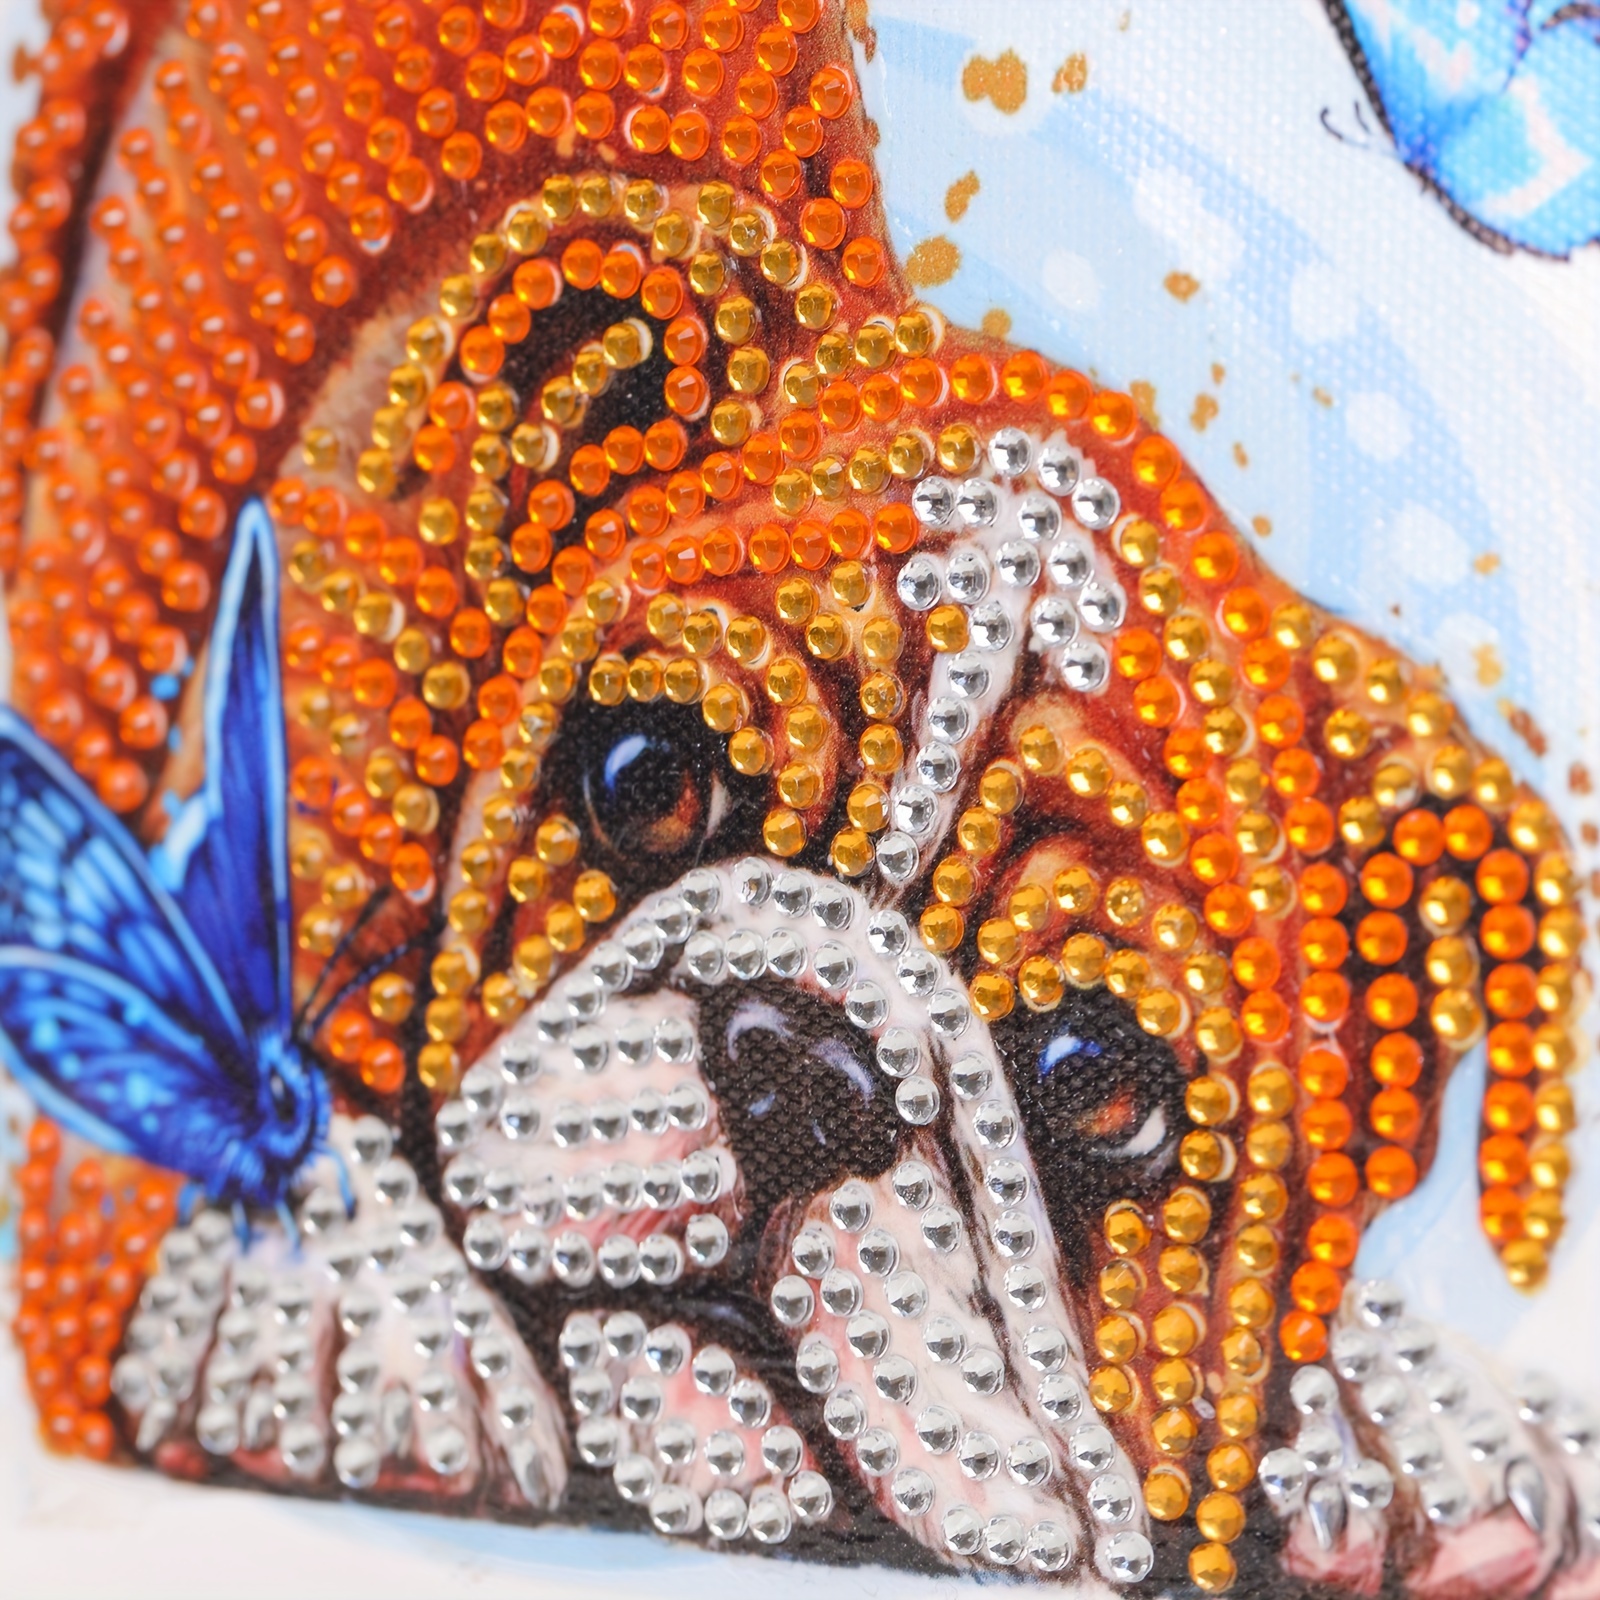 Love.Thanks Animal Diamond Paint Dog Diamond Art Mosaic Cross Stitch  Diamond Dots Painting Mosaic